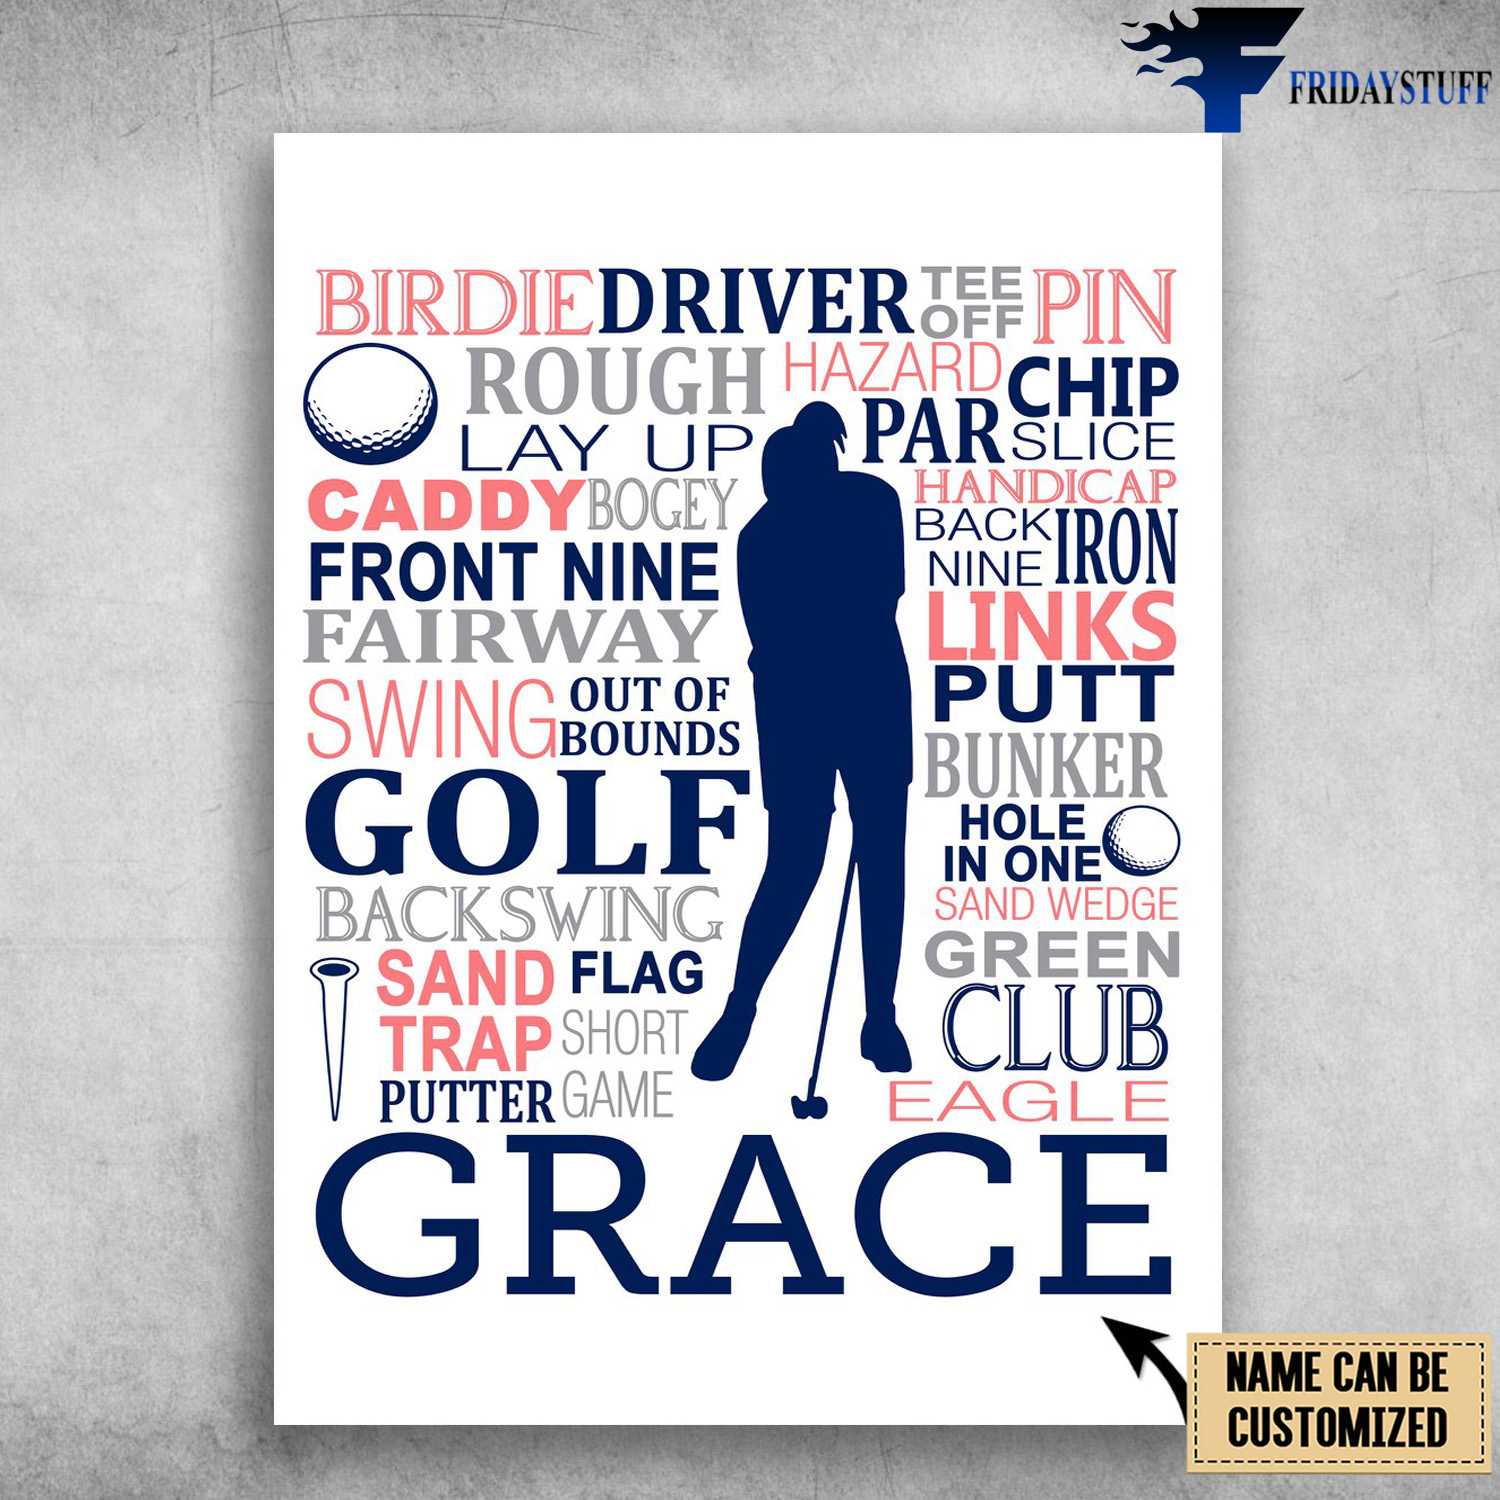 Golf Poster, Birdie Driver Tee Of Pin, Rough, Hazard, Chip, Lay Ip, Par, Slice, Handicap